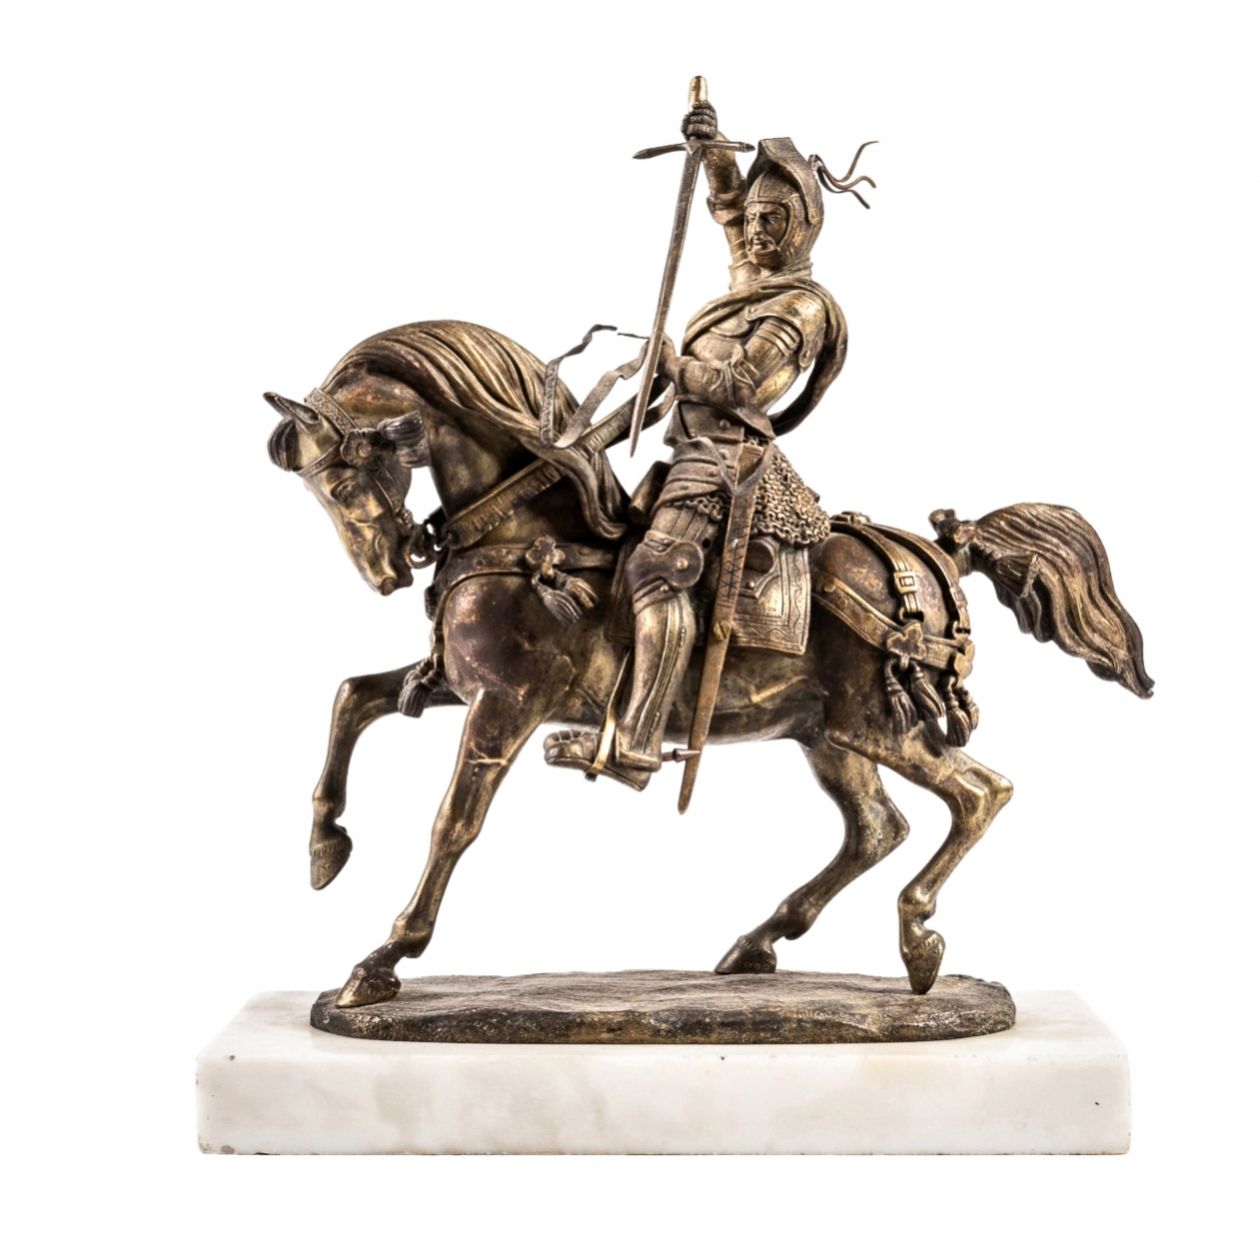 Carlo-Marochetti-Bronze-figure-of-an-equestrian-knight-Duke-of-Savoy-